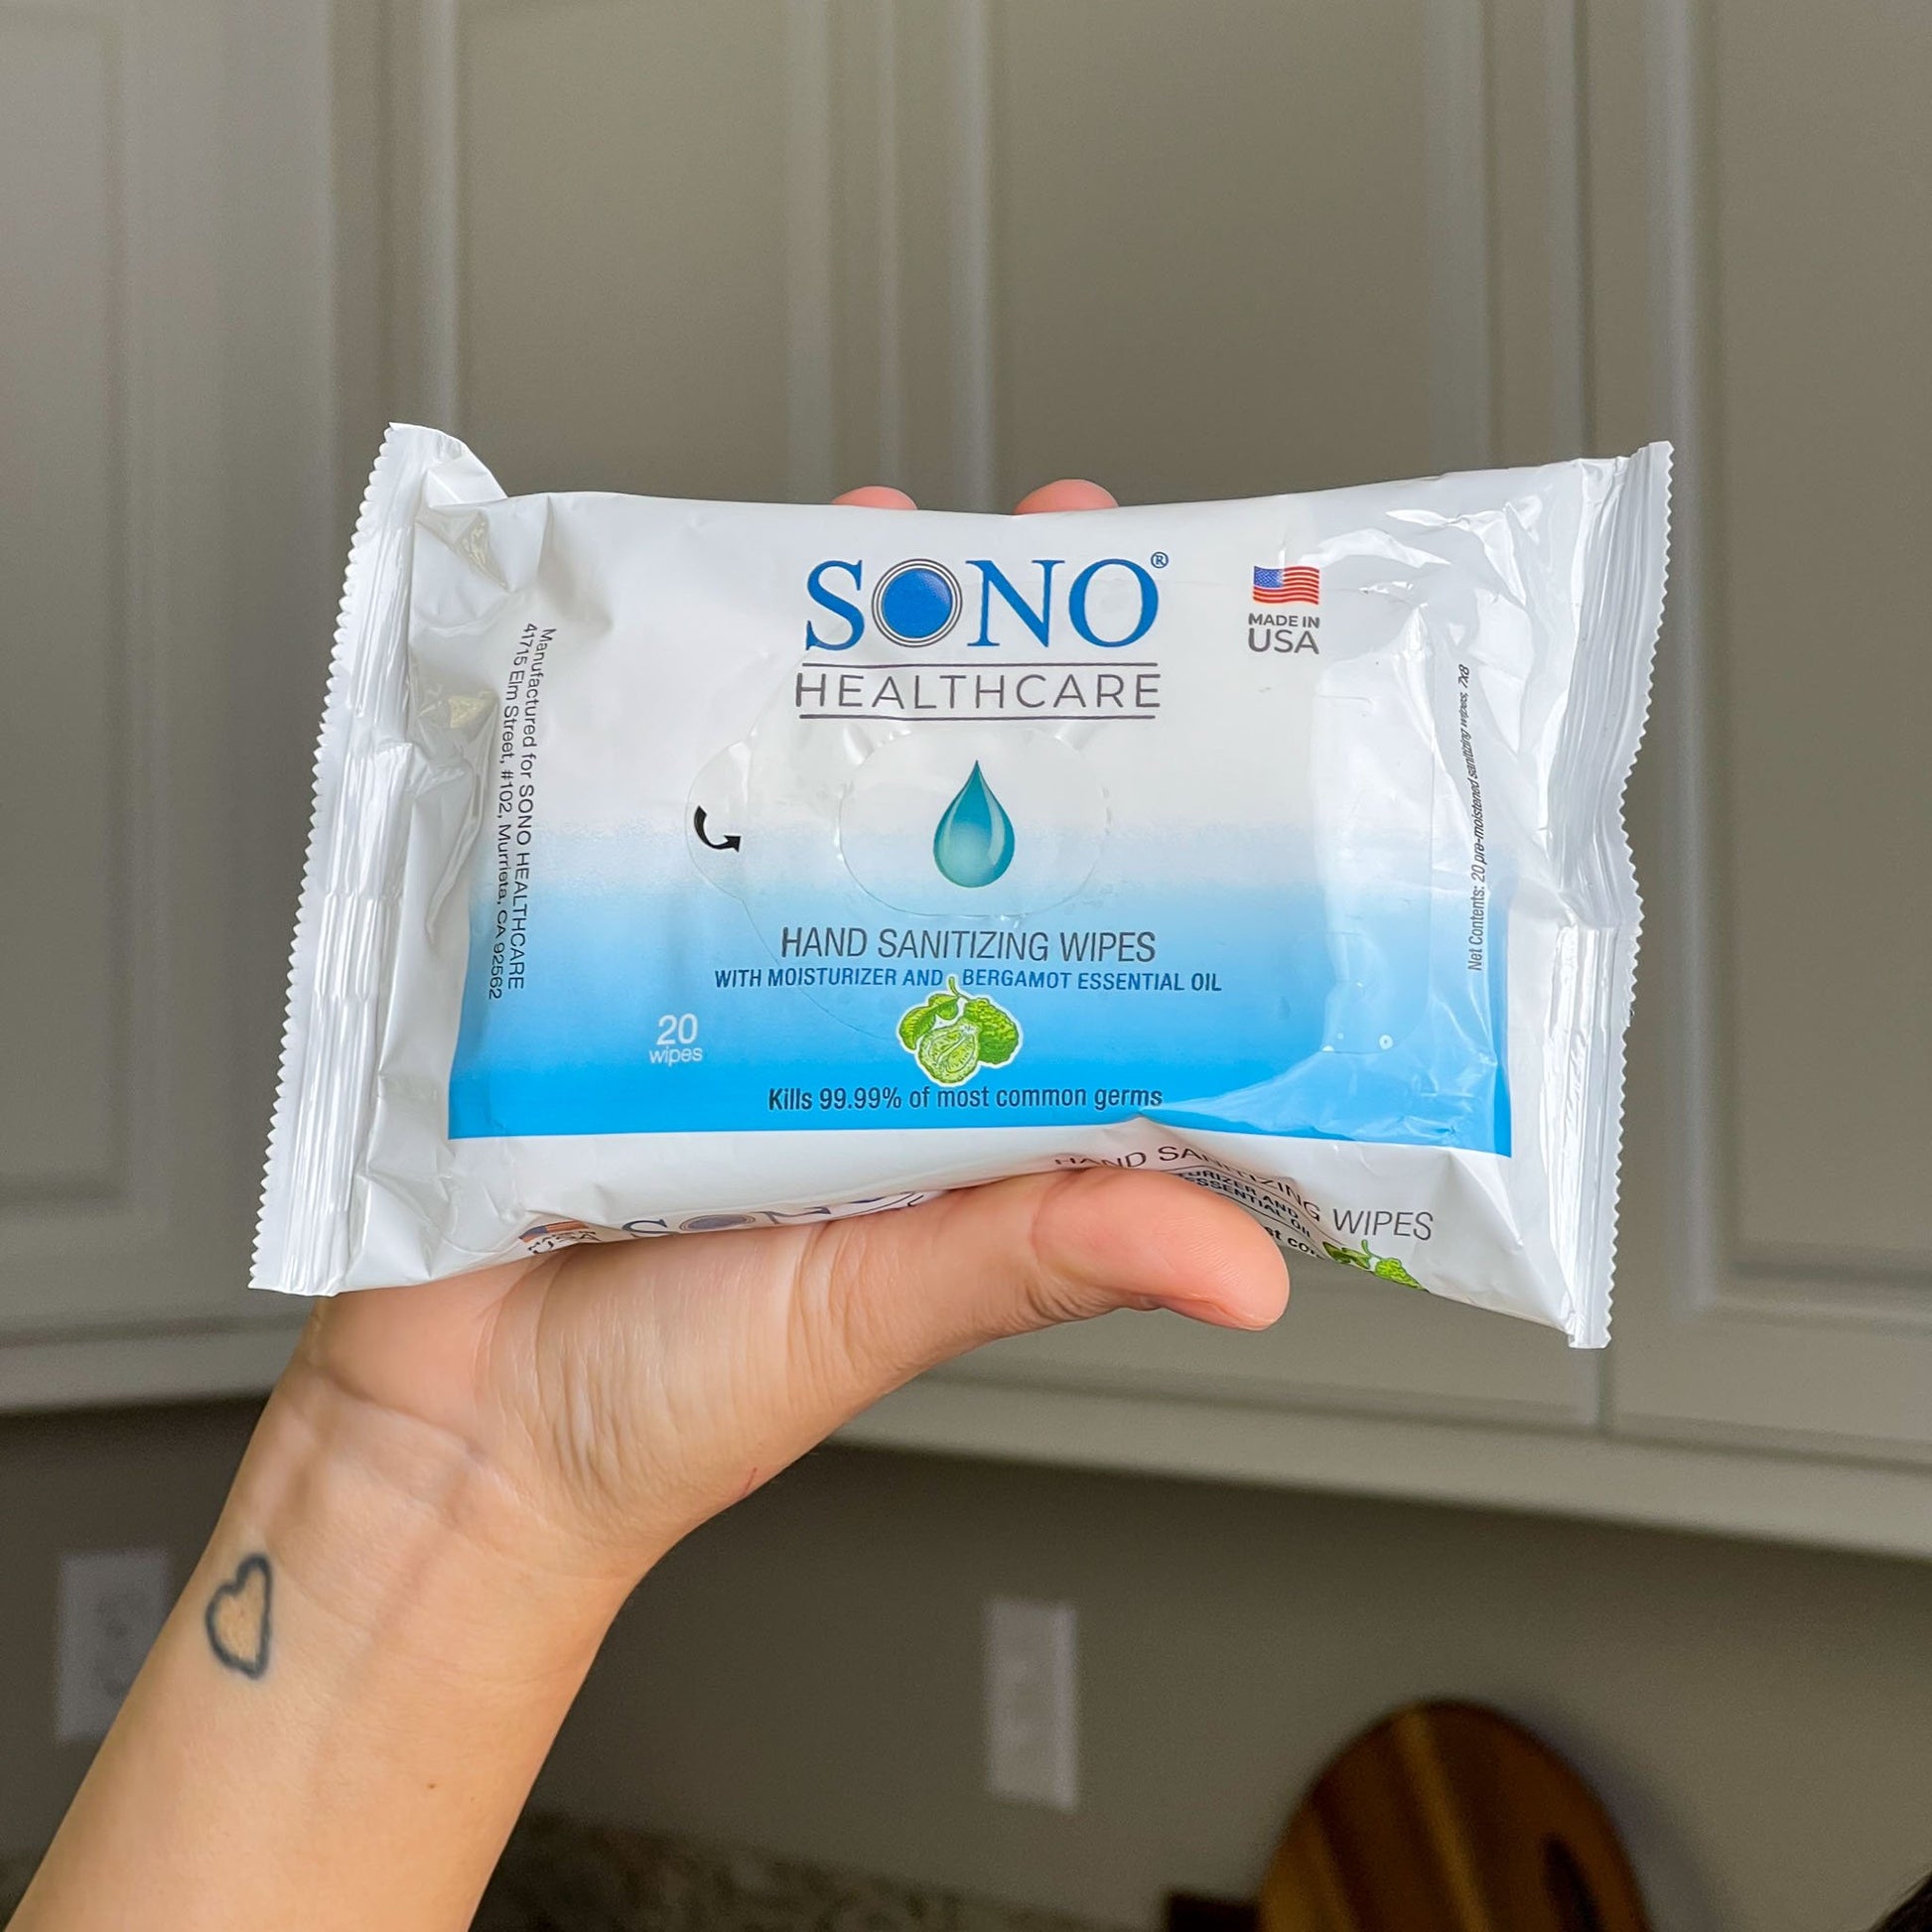 Premium Hand Sanitizing Wipes - SONO wipes